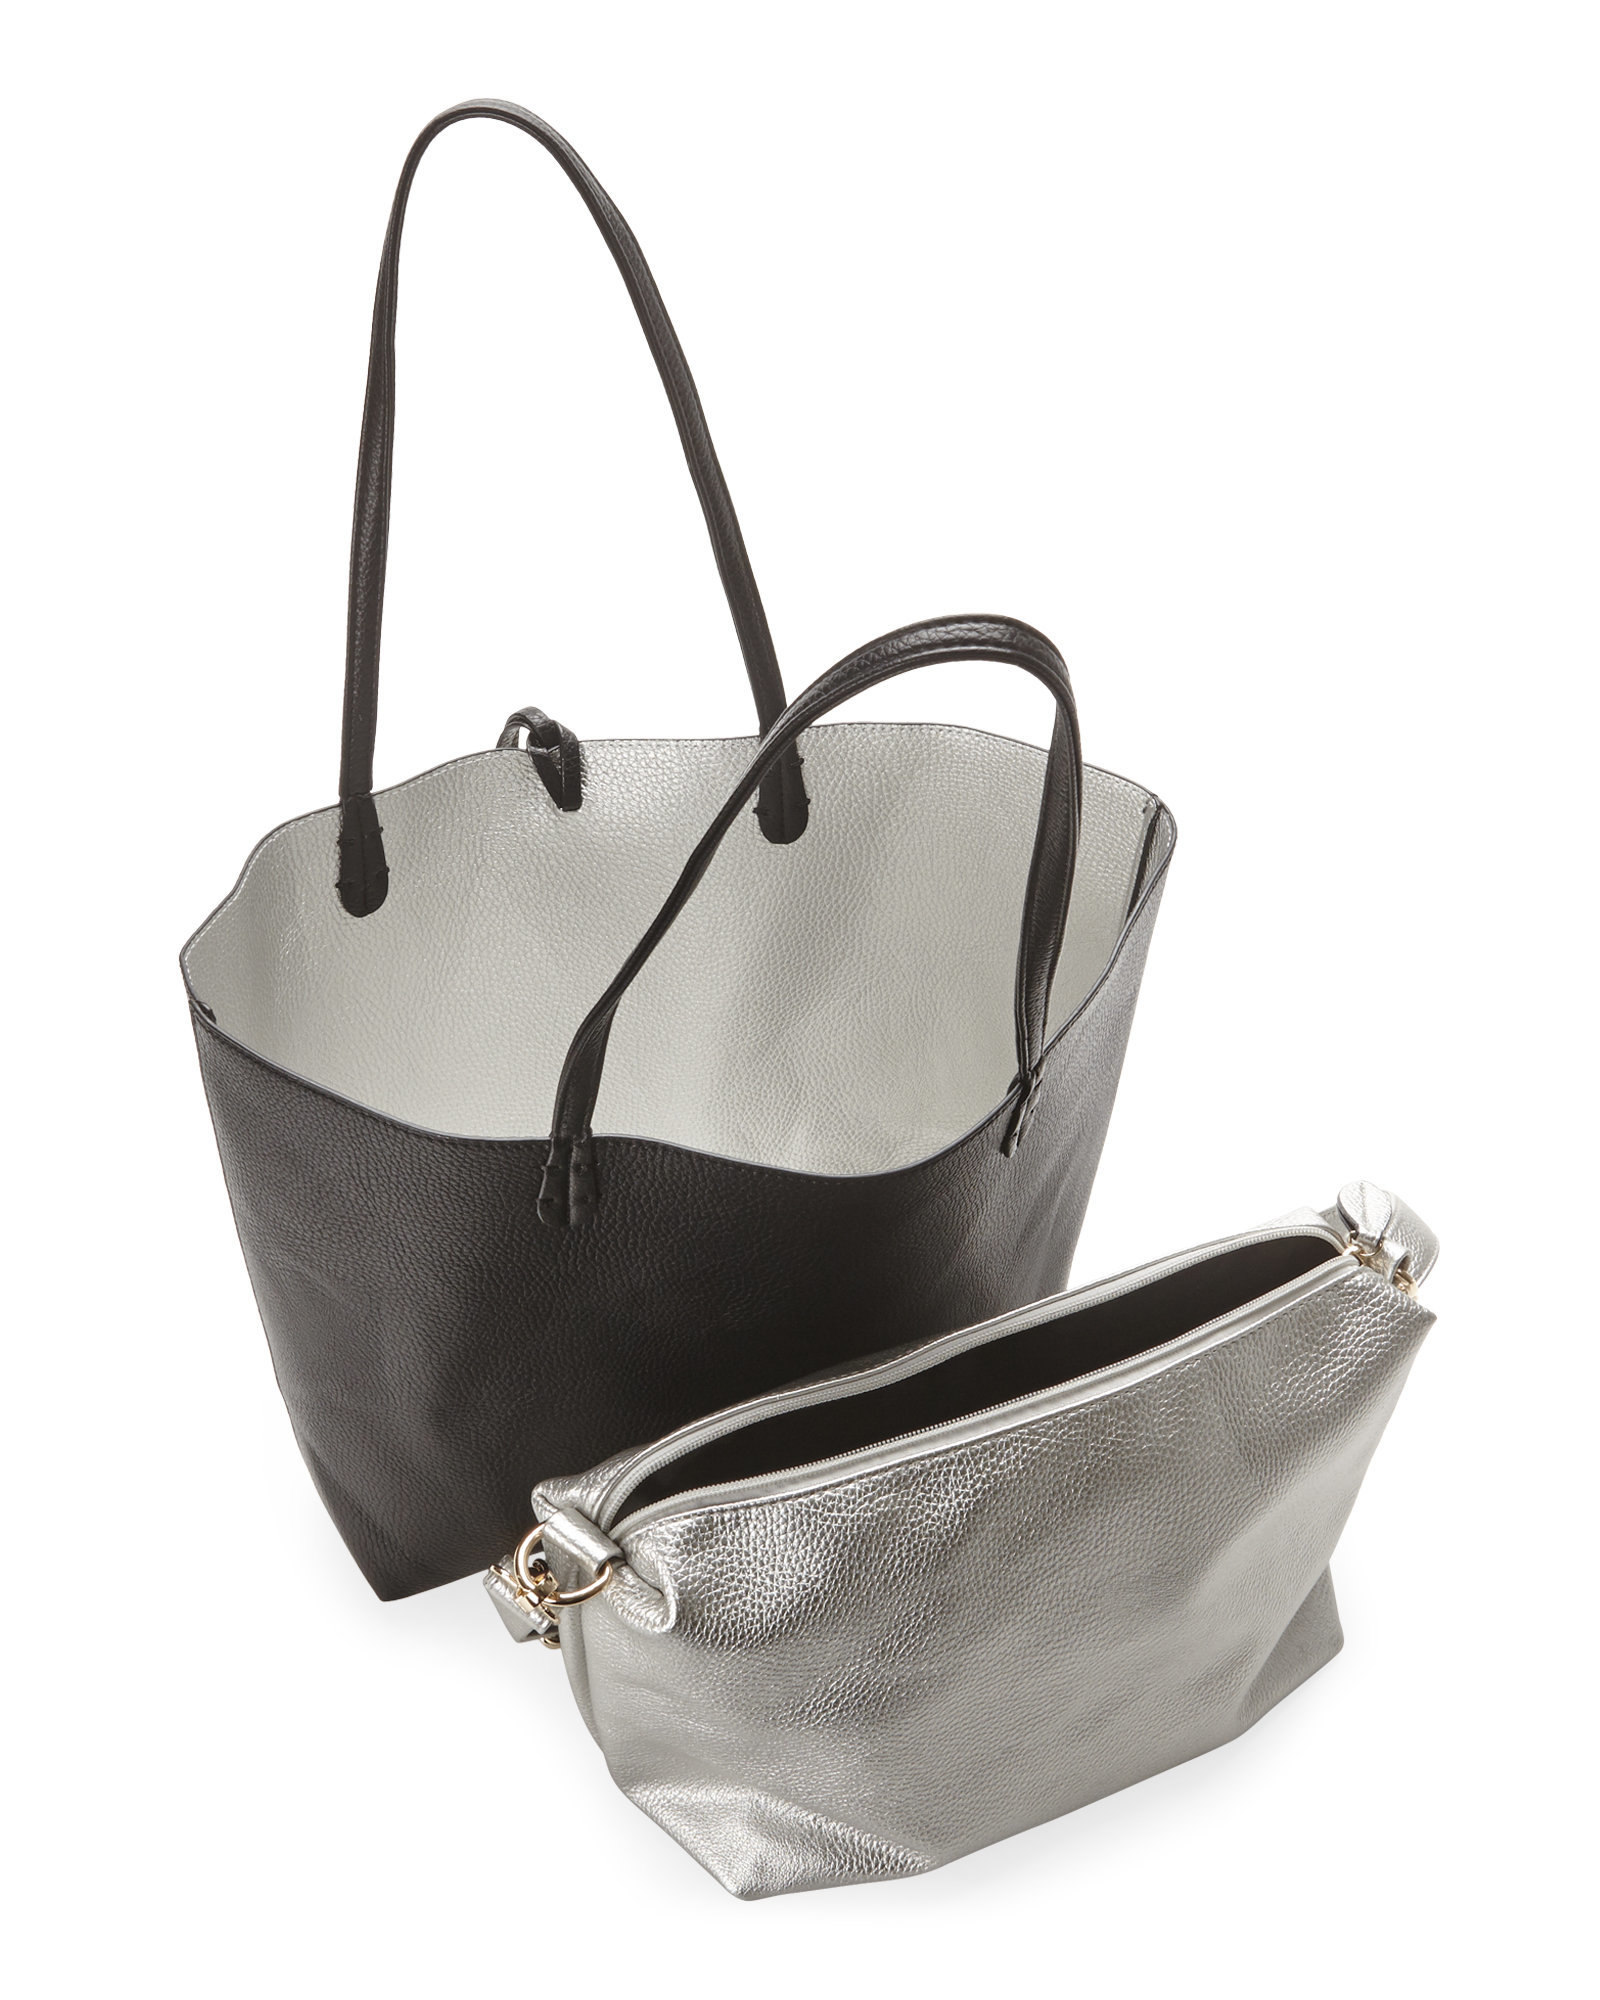 Lyst - Imoshion Black & Silver Reversible Bag-In-Bag Tote in Black